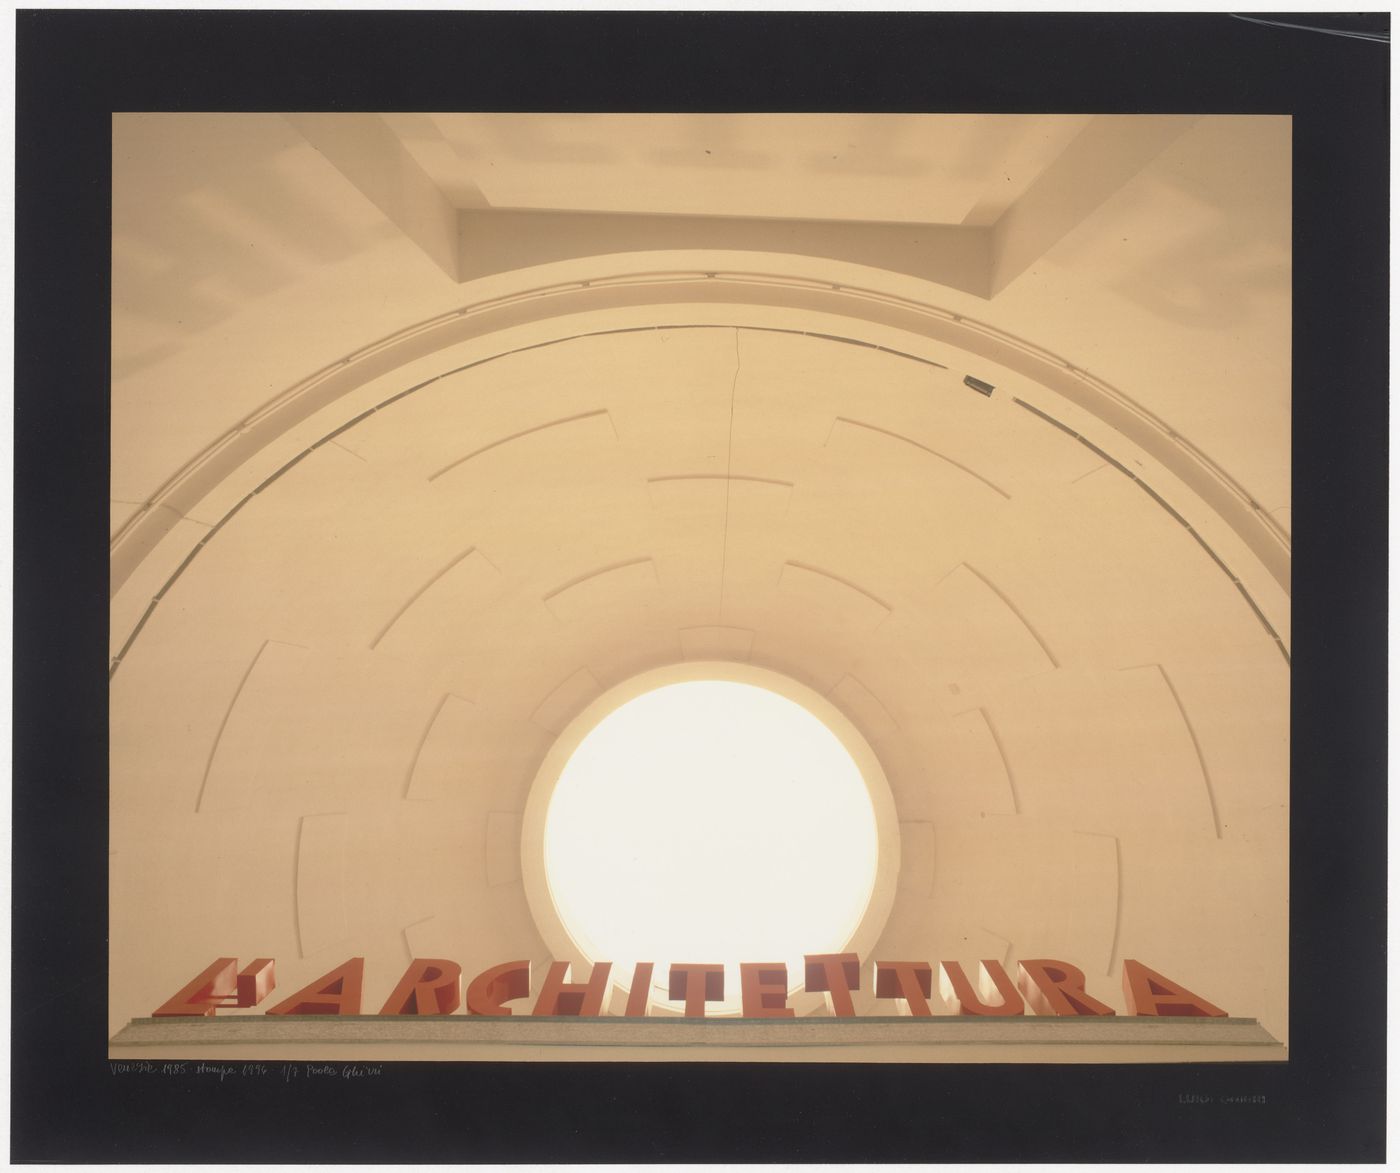 Third International Exhibition of Architecture, Venice Biennale (1985); detail of the interior portal